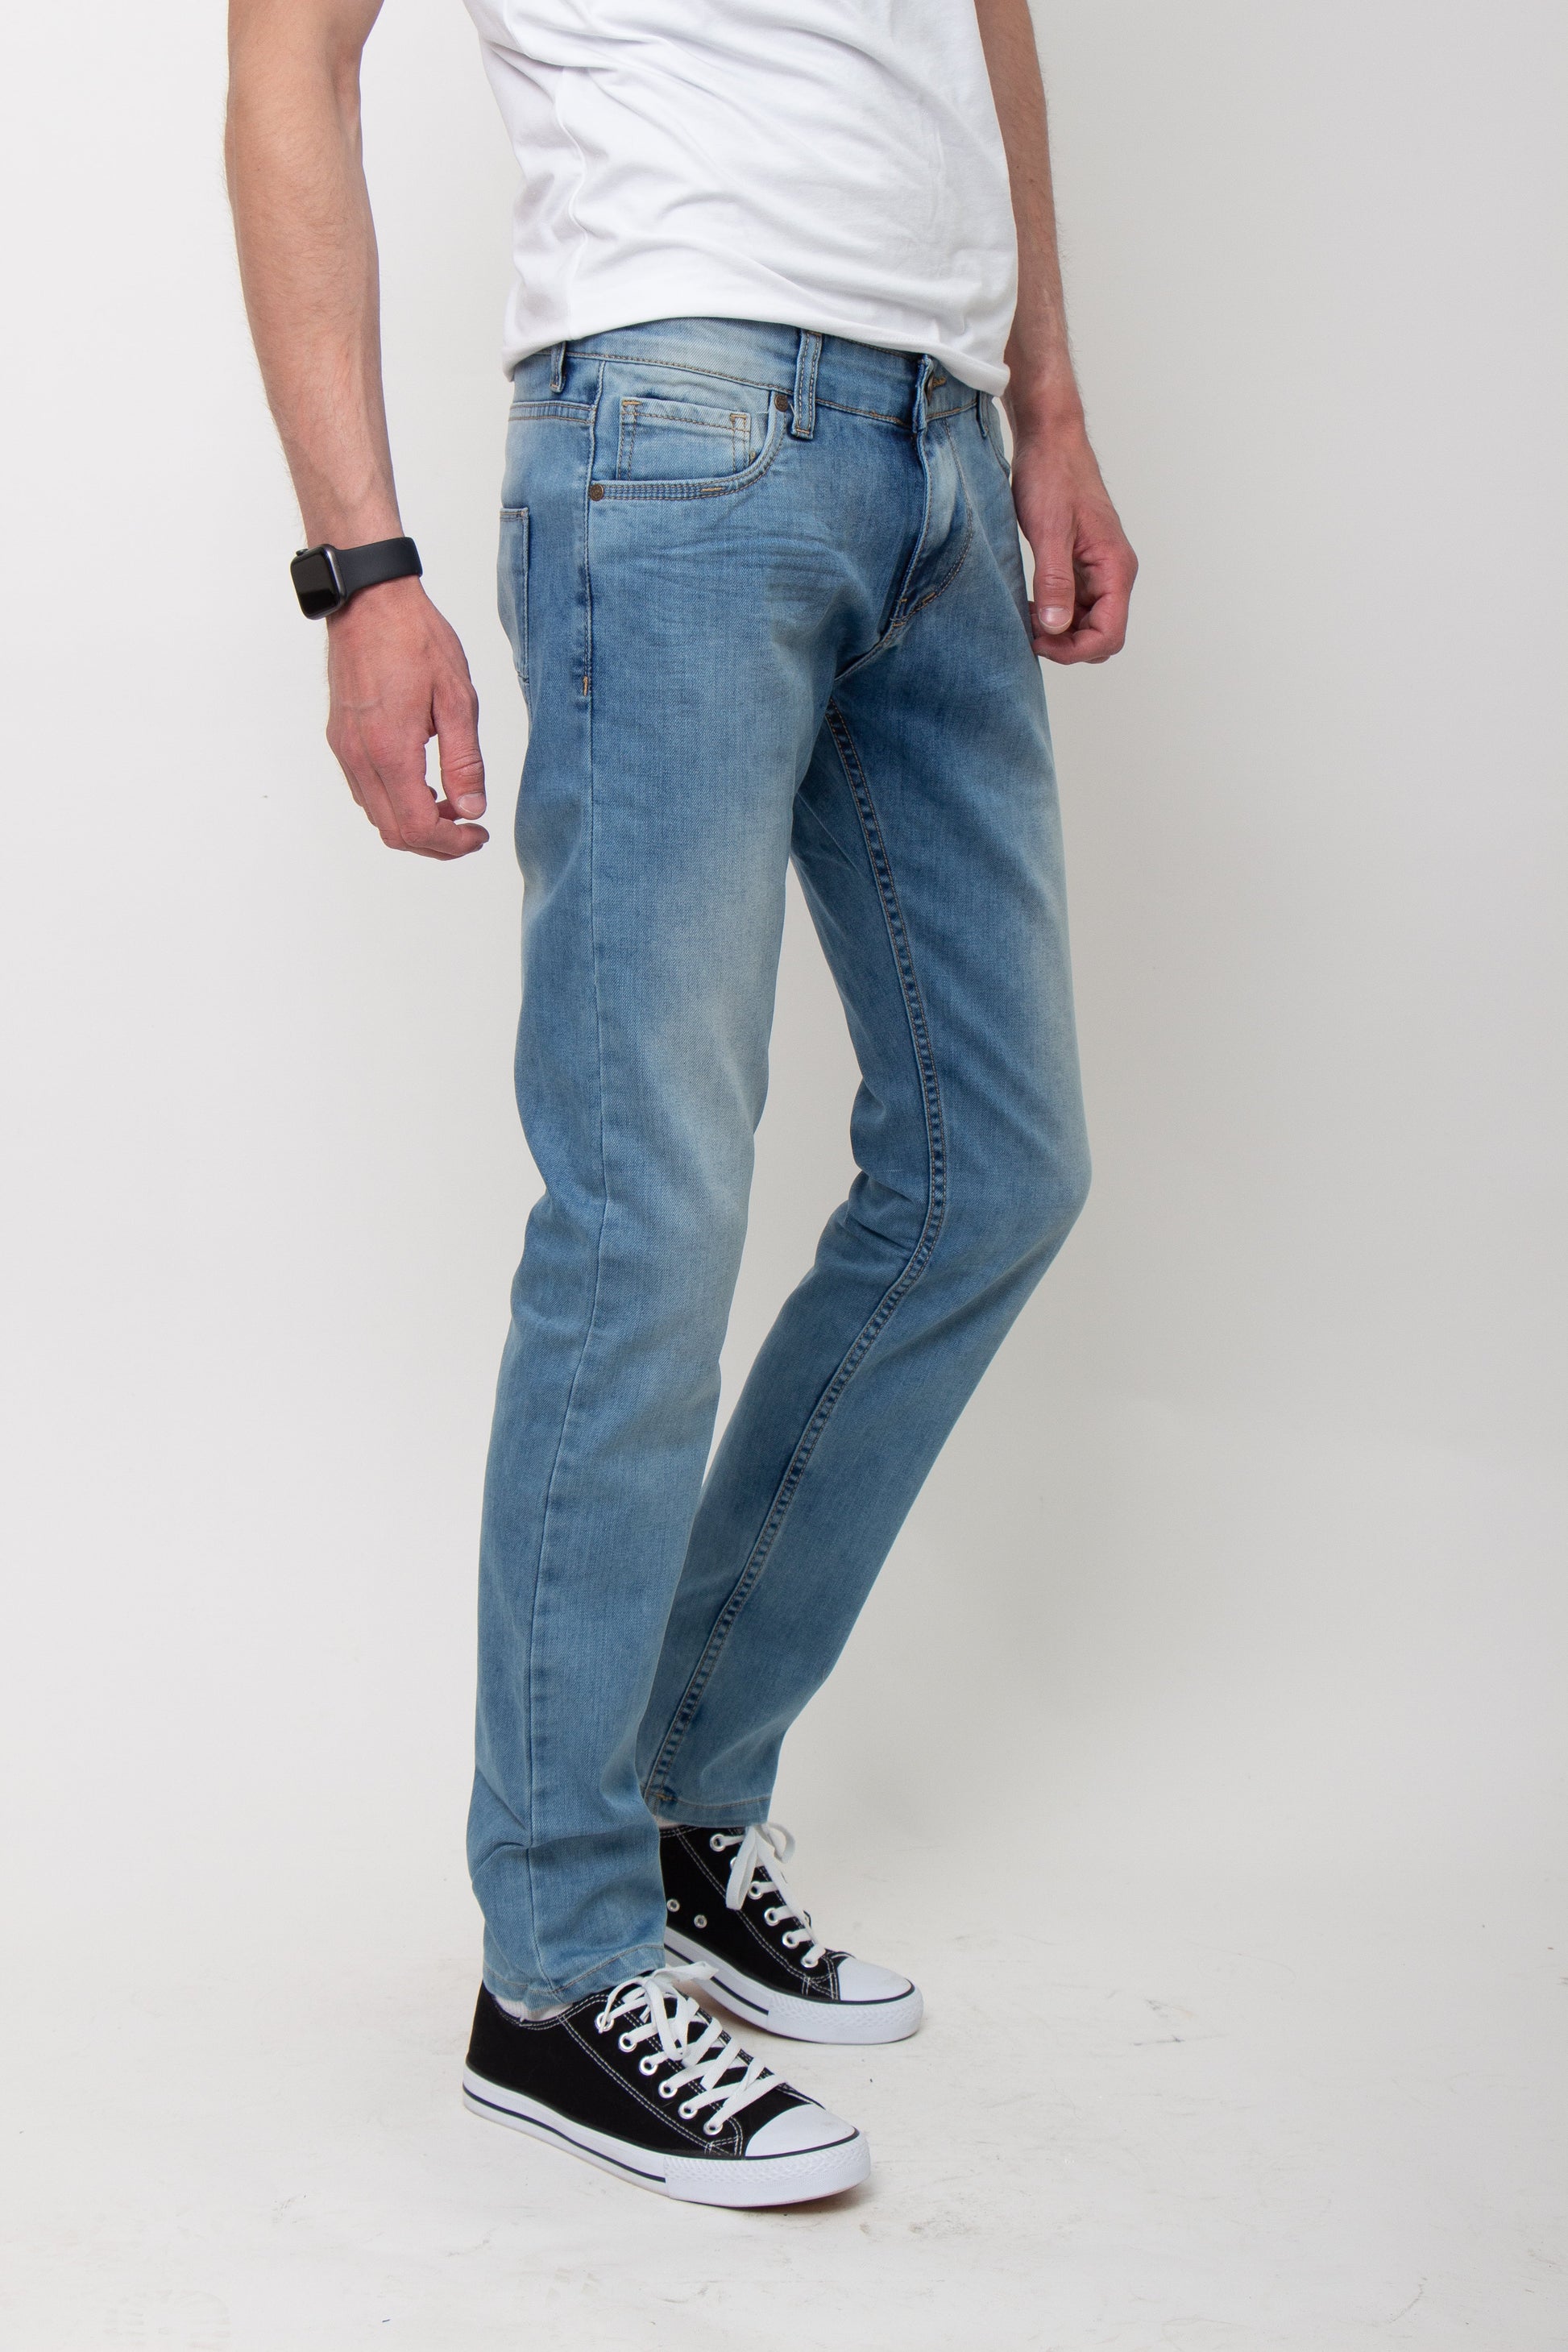 Porto Jeans-4